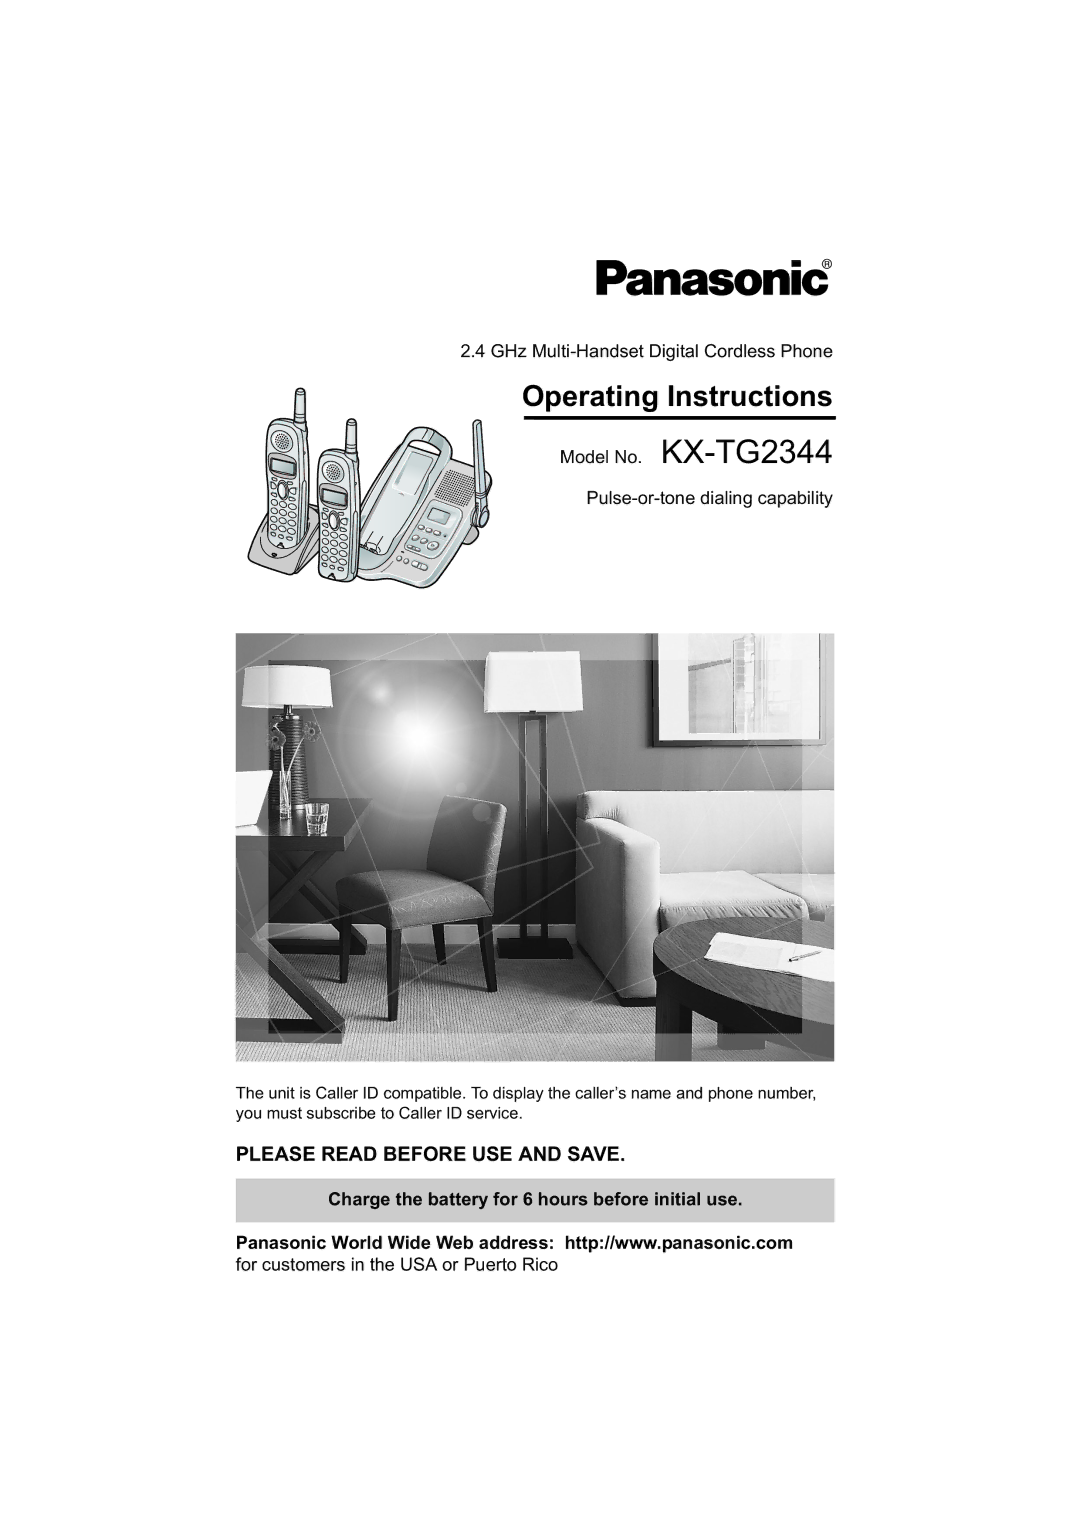 Panasonic manual GHz Multi-Handset Digital Cordless Phone, Model No. KX-TG2344 Pulse-or-tone dialing capability 